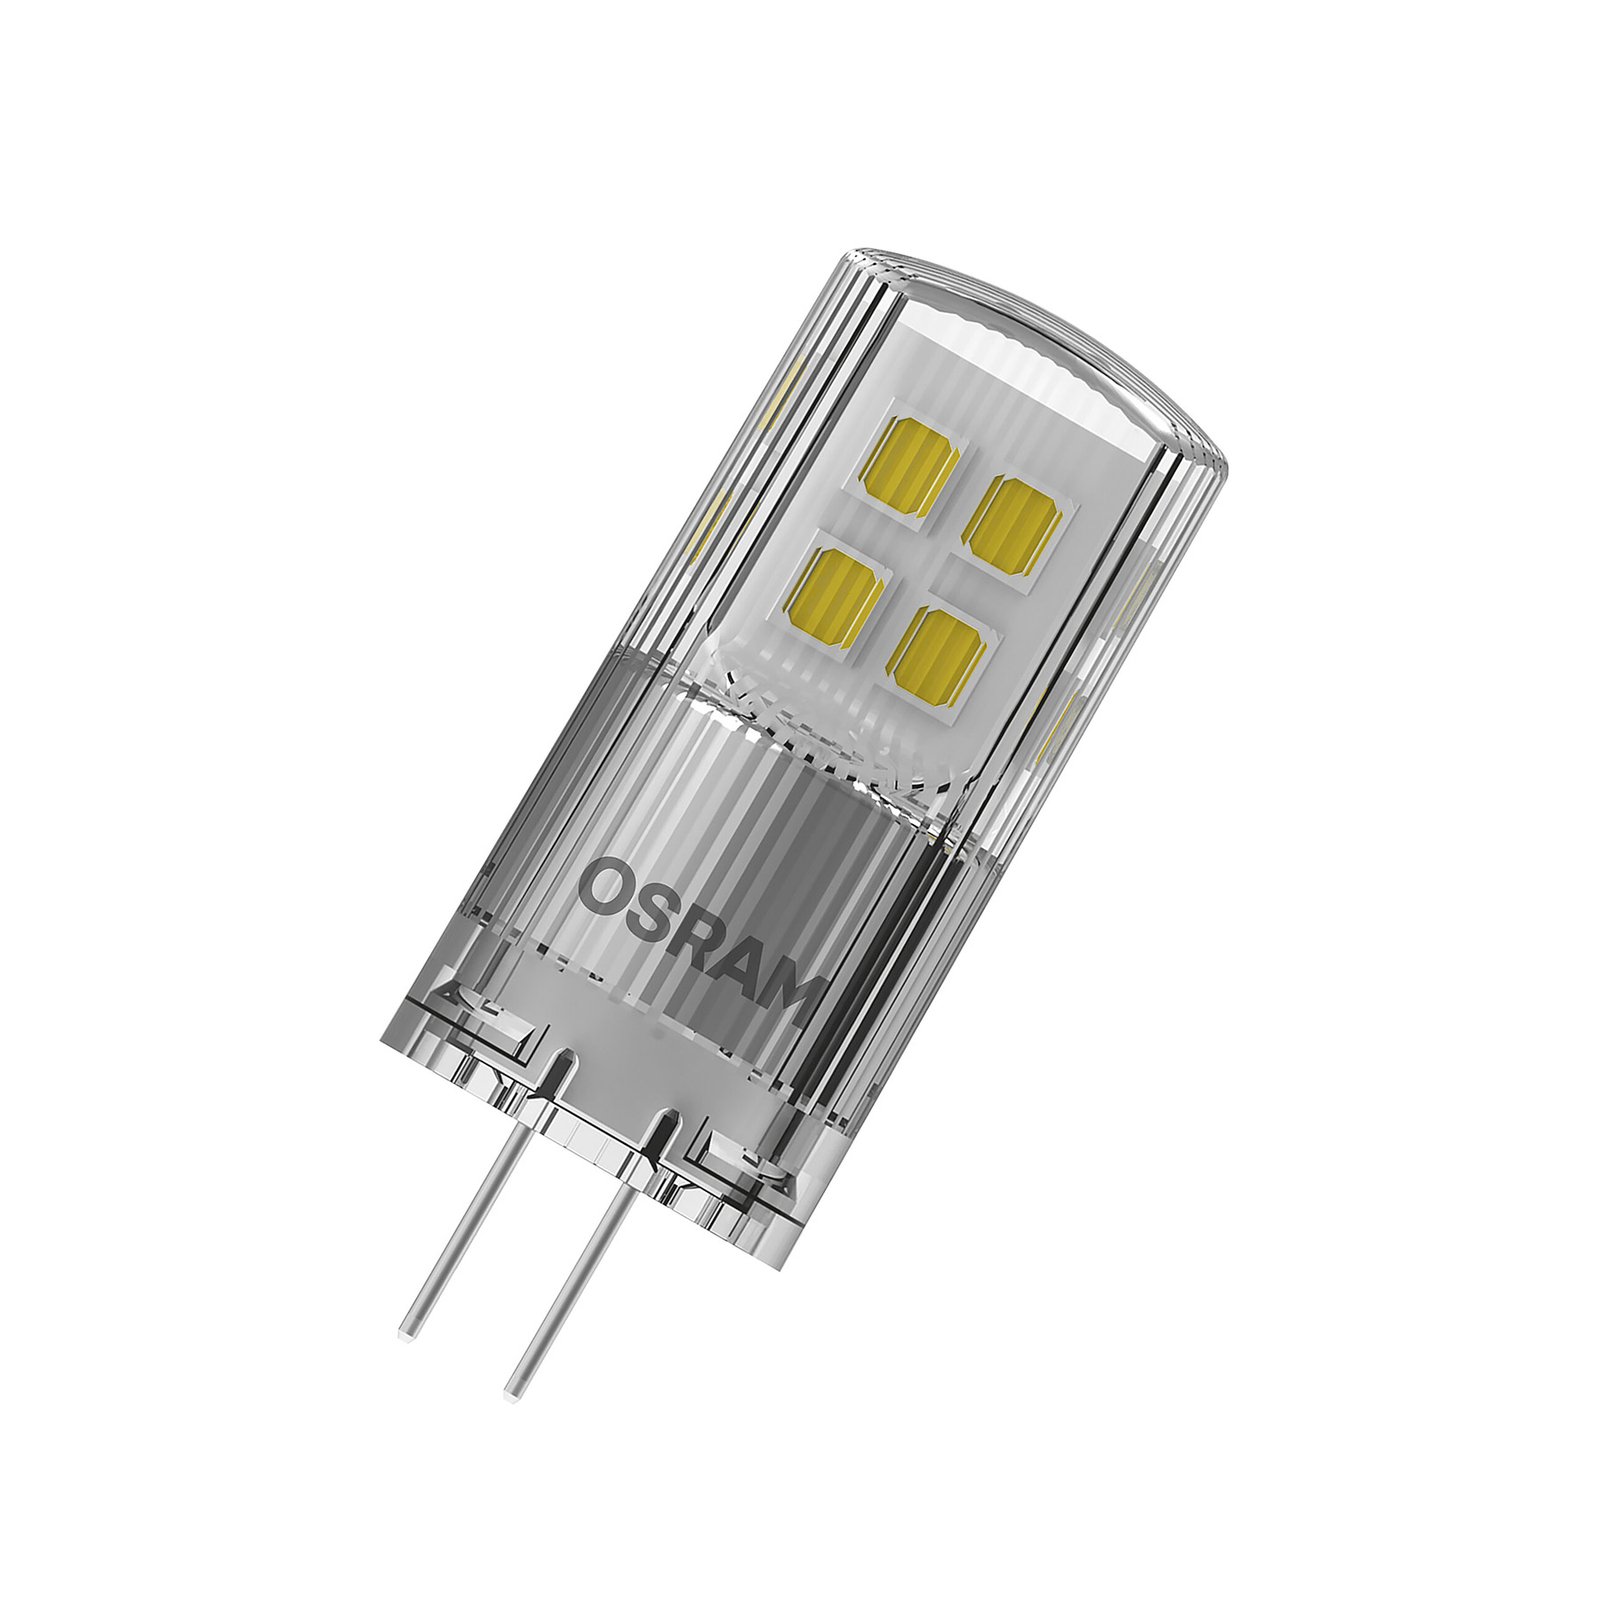 OSRAM PIN 12V bi-pin LED bulb G4 2W 200lm dimmable